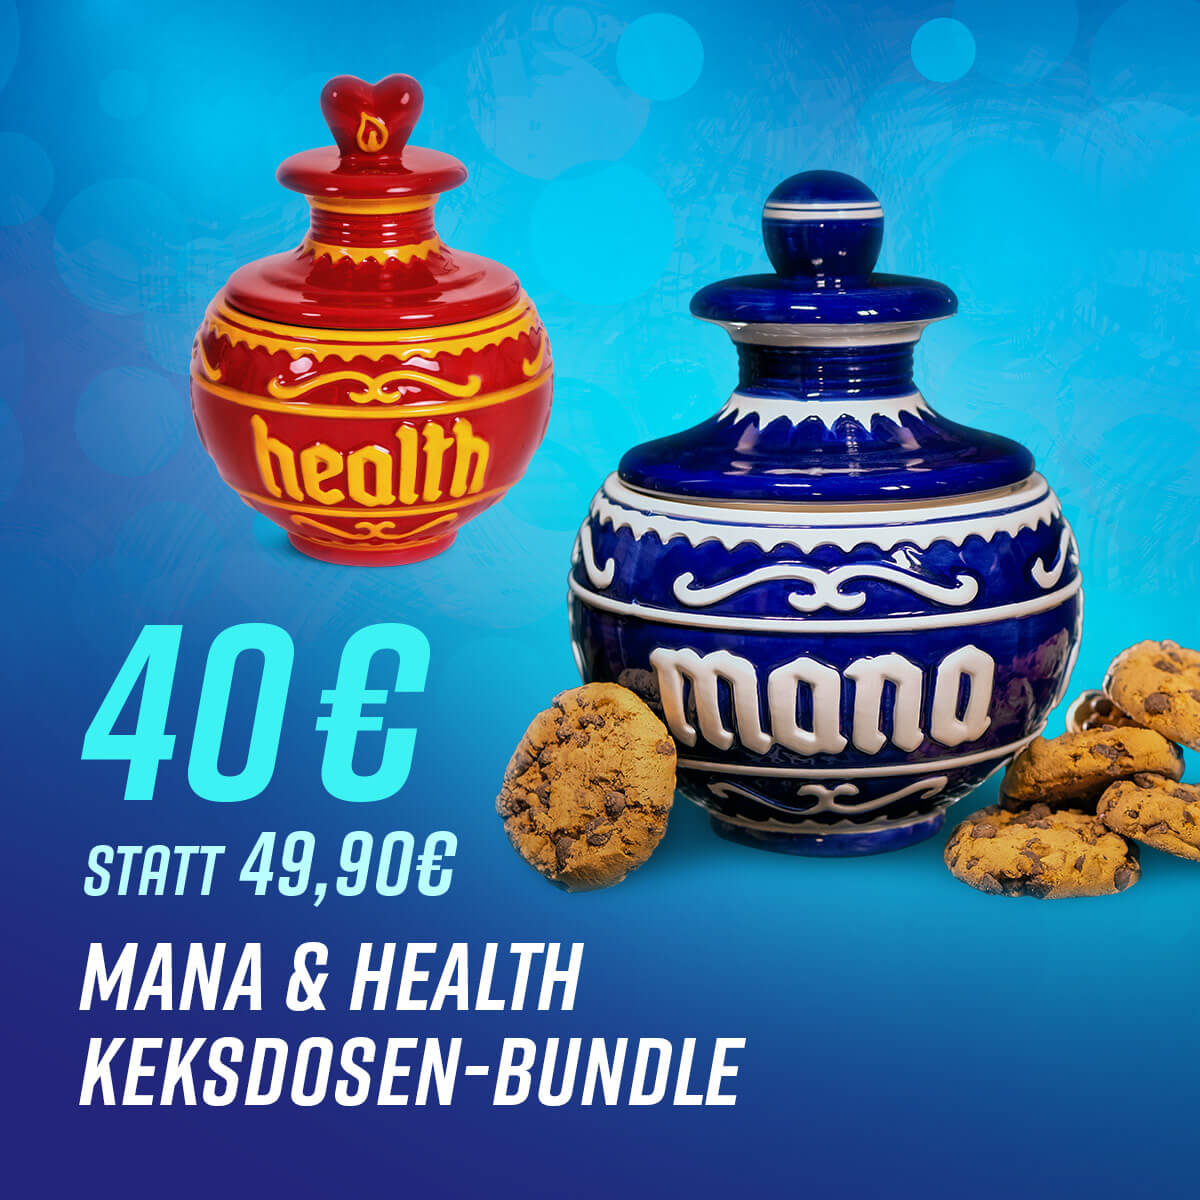 40€ statt 49,90€ auf Mana & Health Keksdosen-Bundle